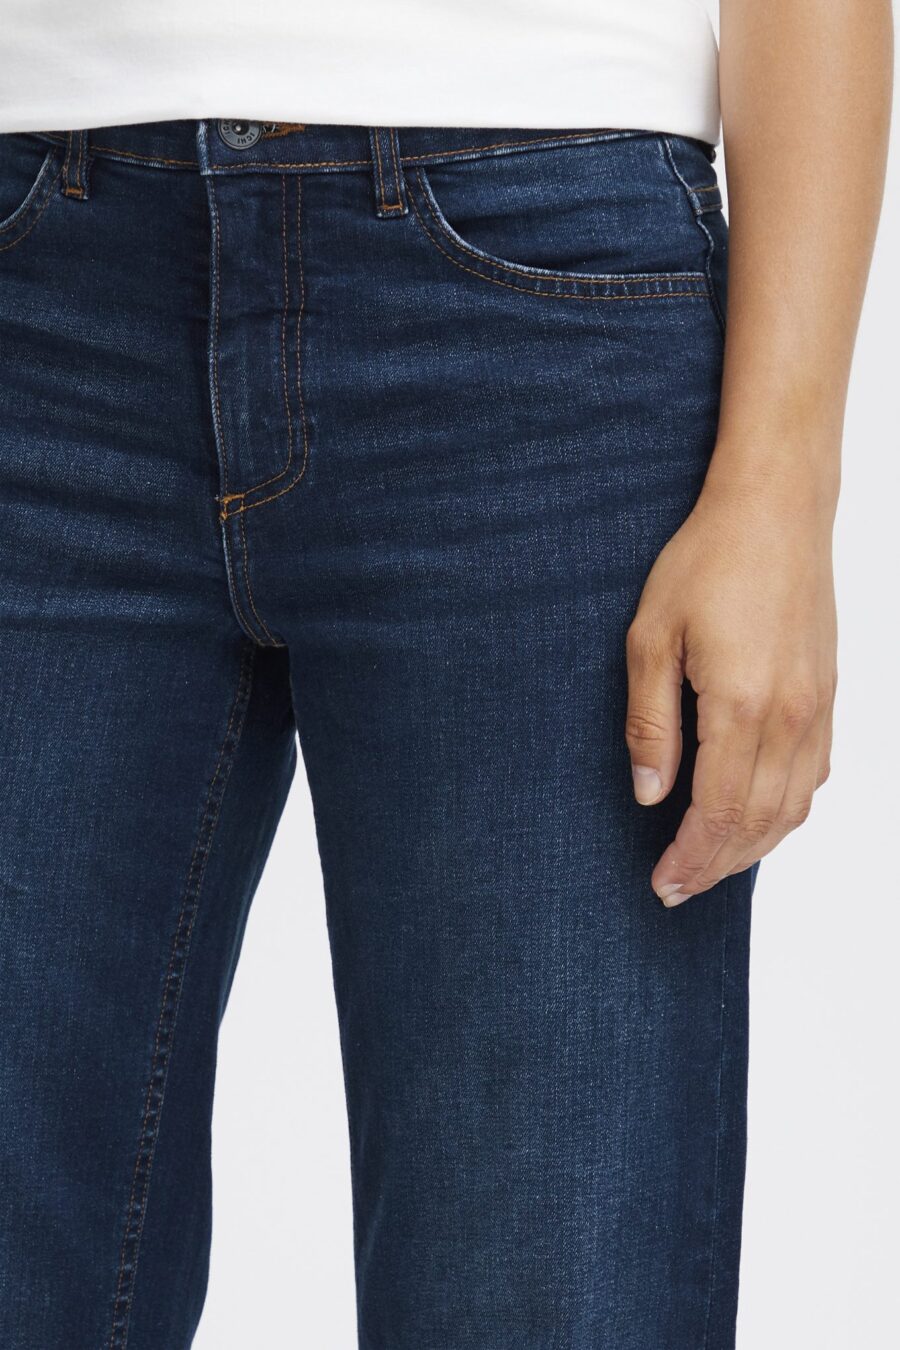 ICHI Twiggy straight long jeans DARK DENIM Wide Leg Celebrity Jeans